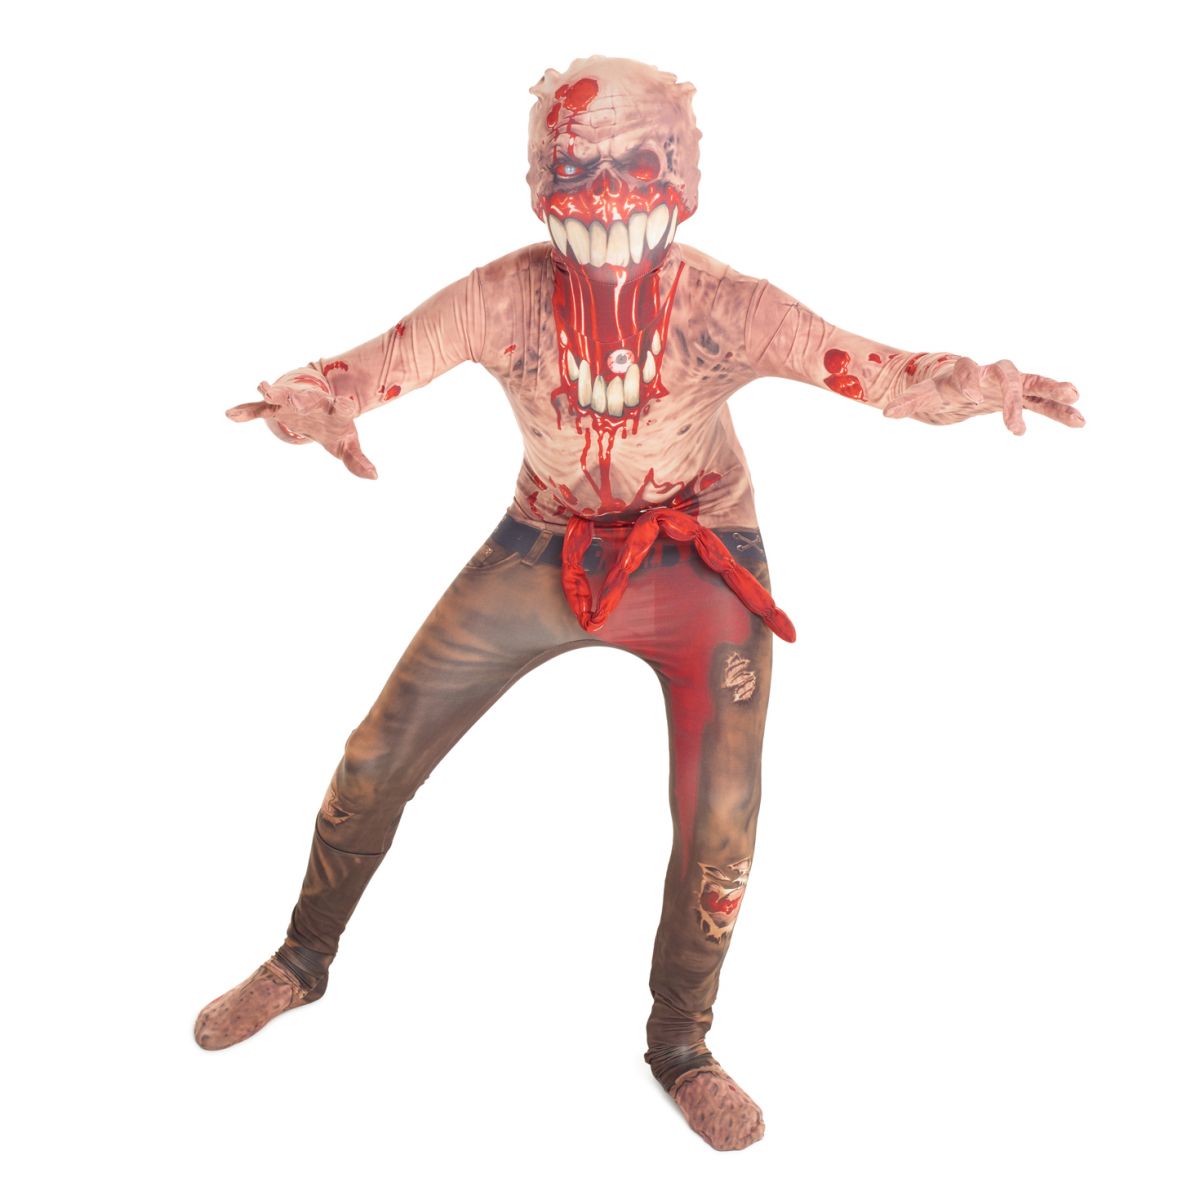 Exploding Guts Zombie Morphsuit  children's Costume for Halloween